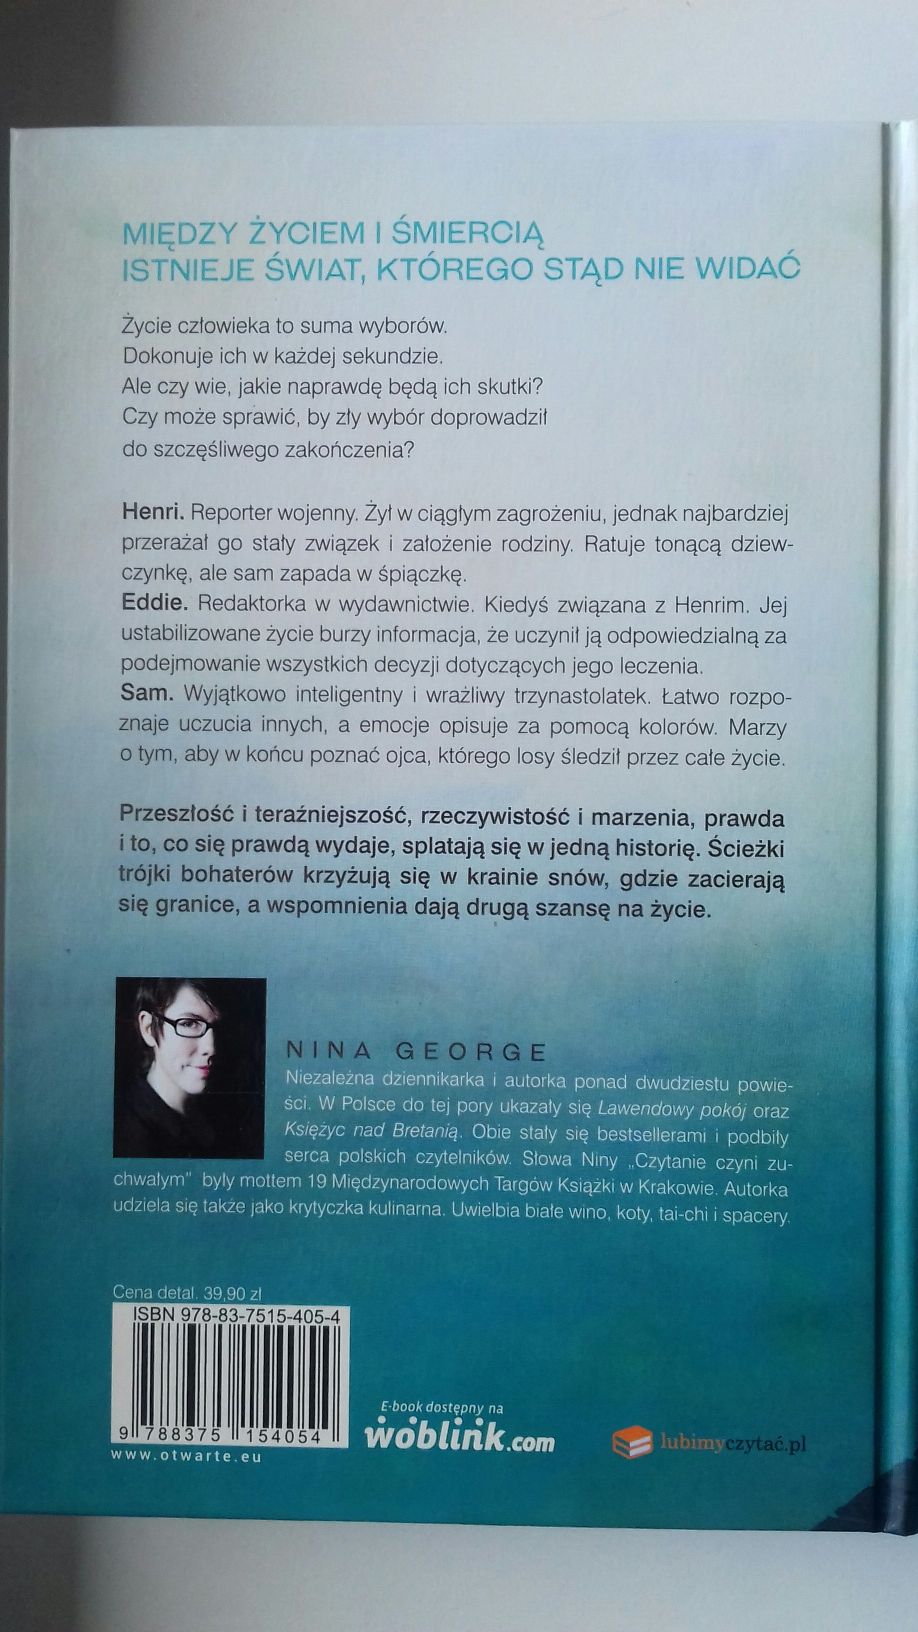 Księga snów Nina George